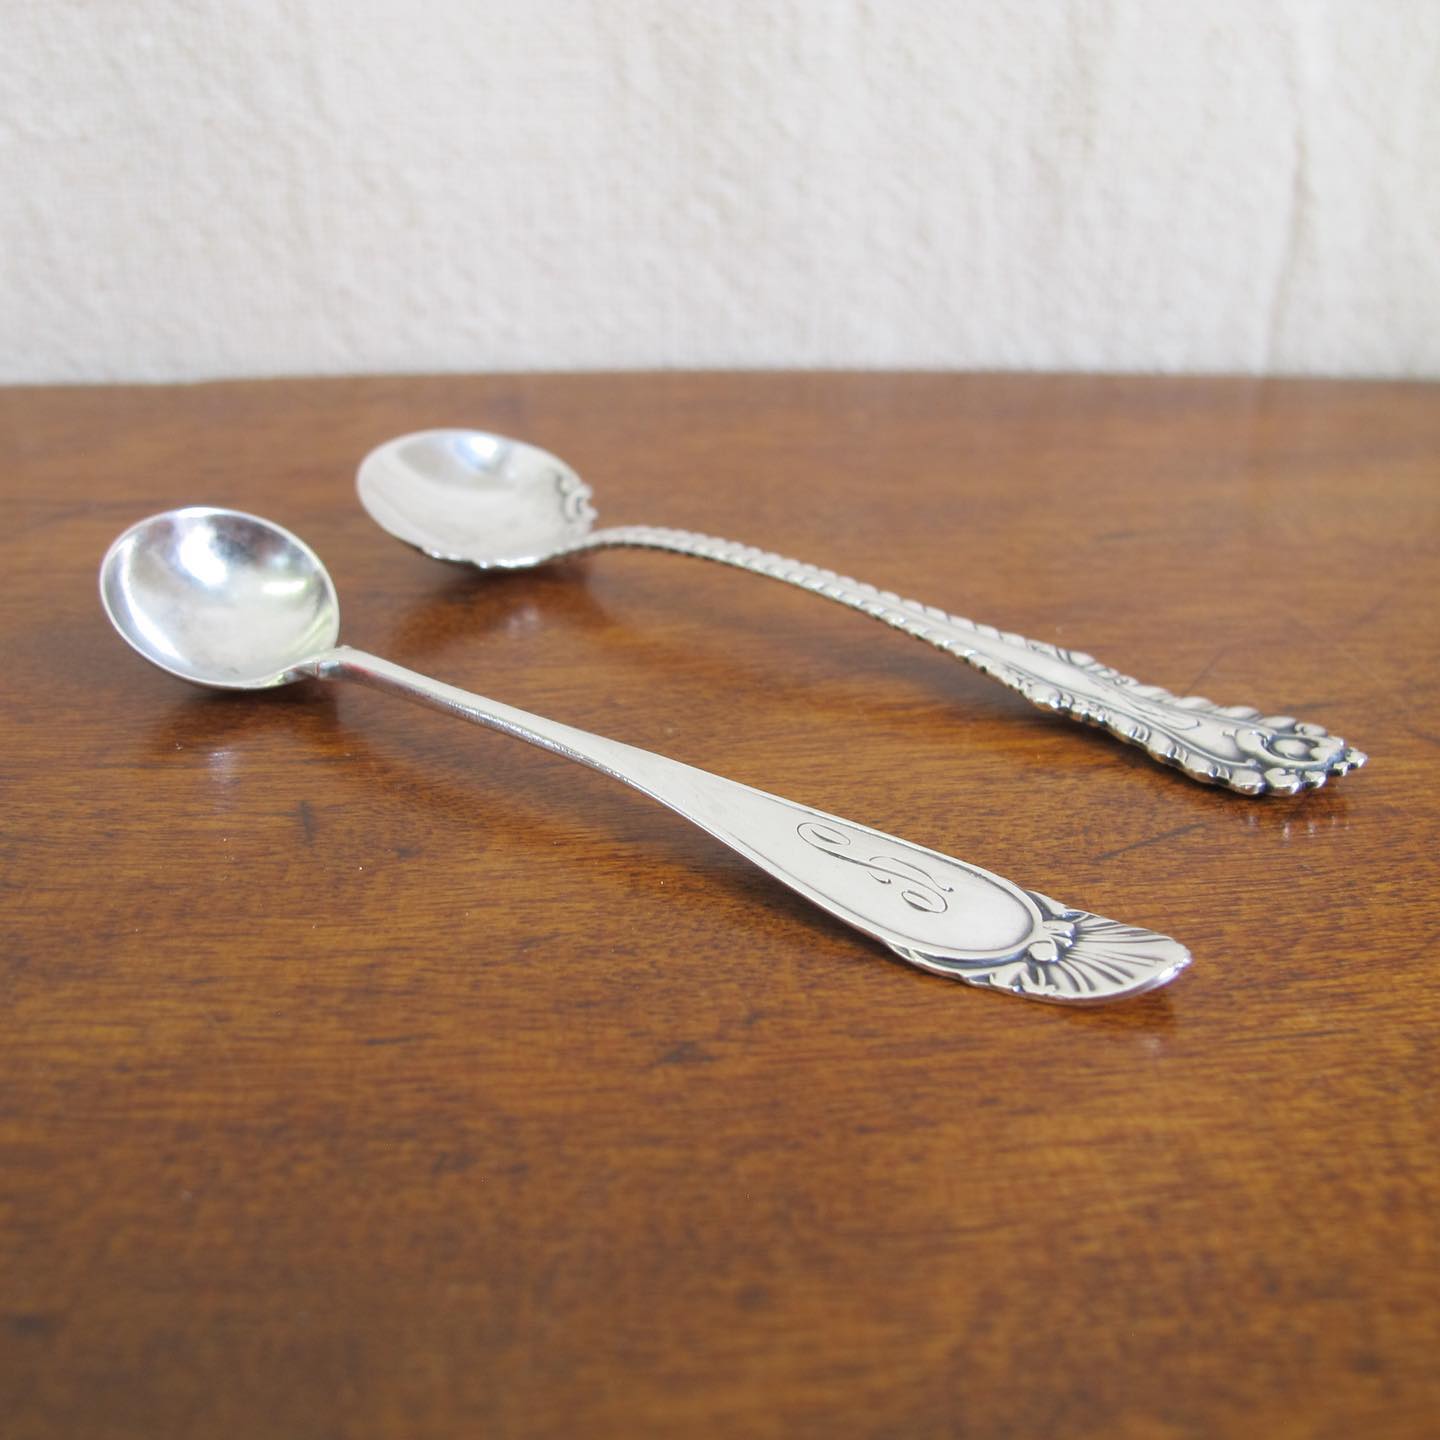 Two Edwardian / Victorian sterling Gorham salt cellar spoons, monogrammed G (I think), c. 1900